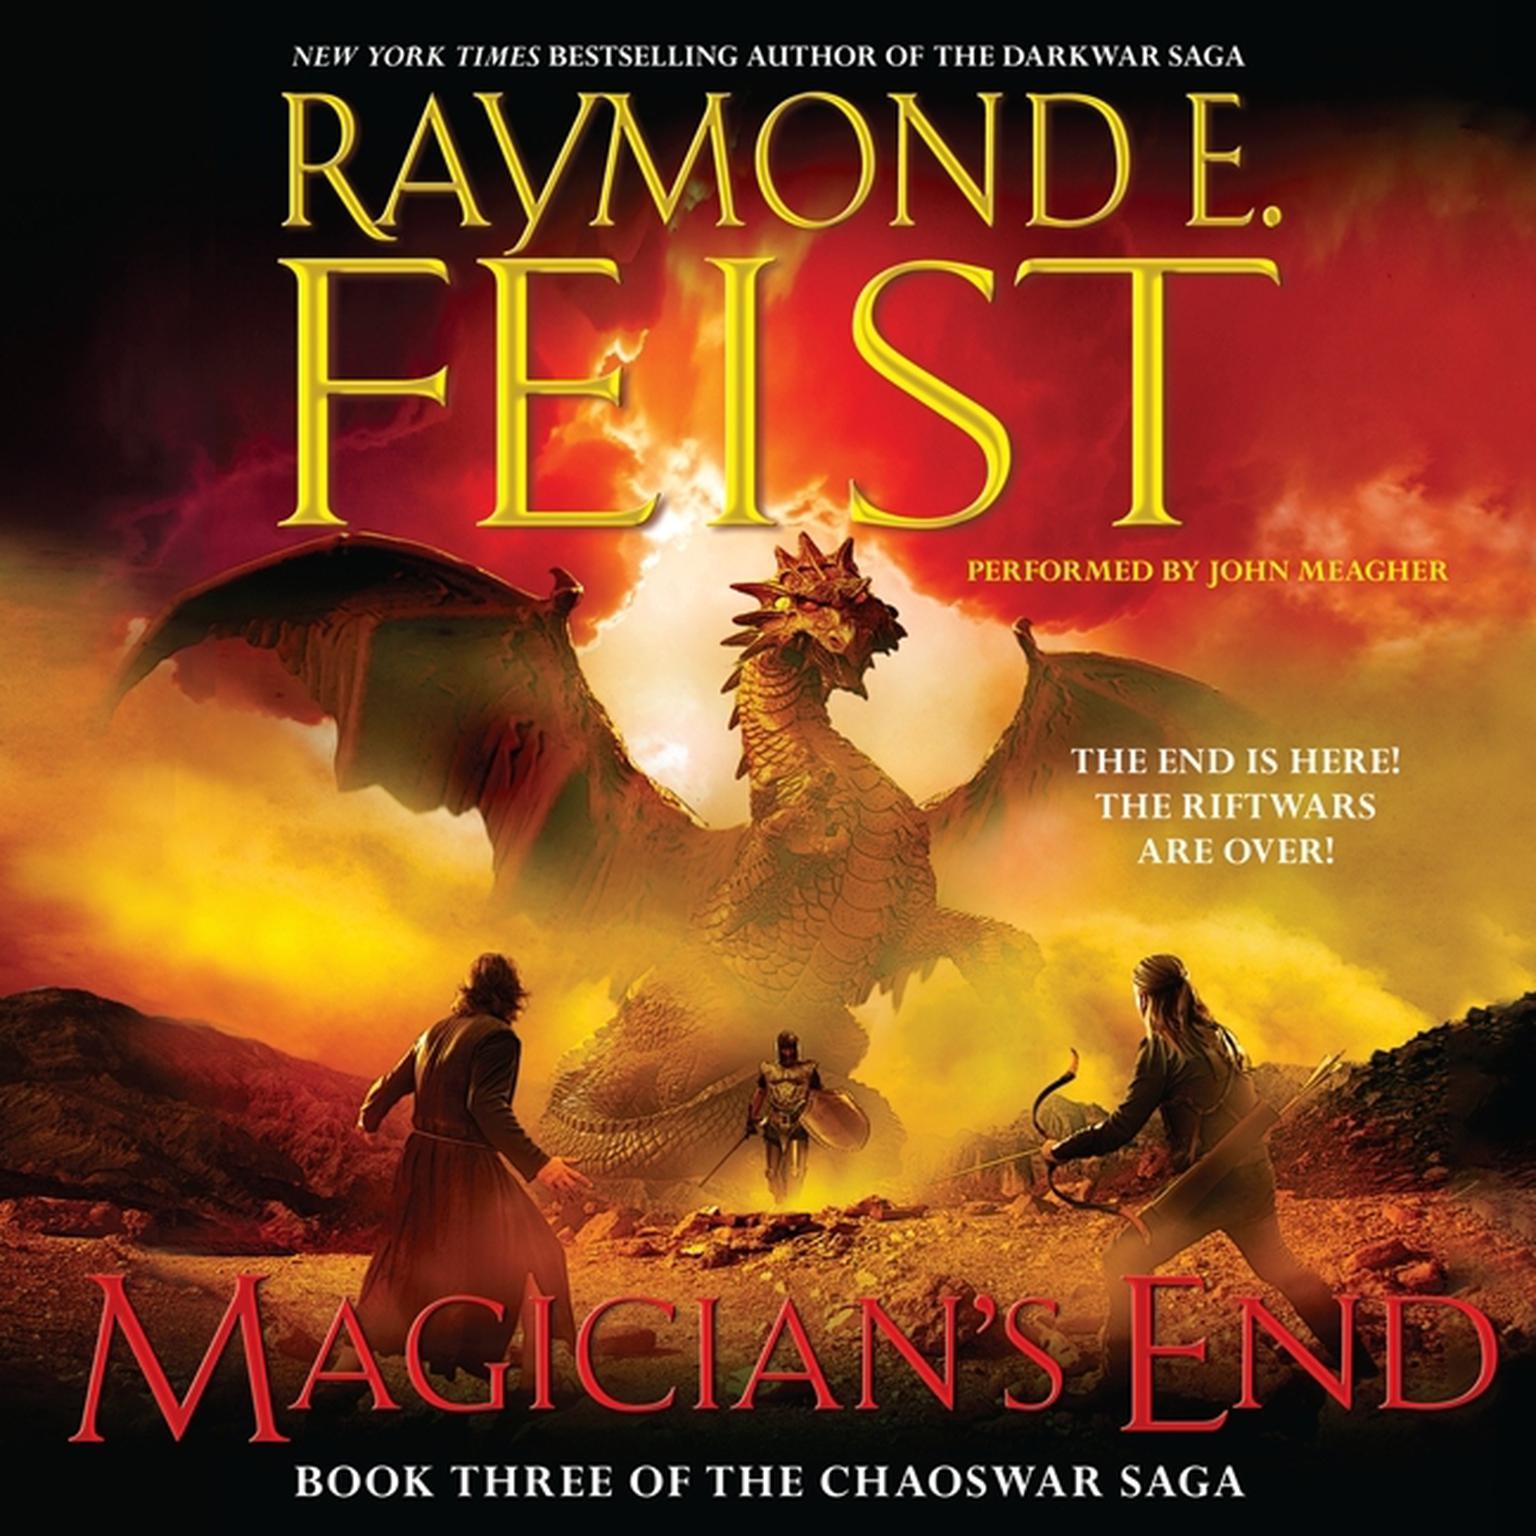 Magicians End: Book Three of the Chaoswar Saga Audiobook, by Raymond E. Feist